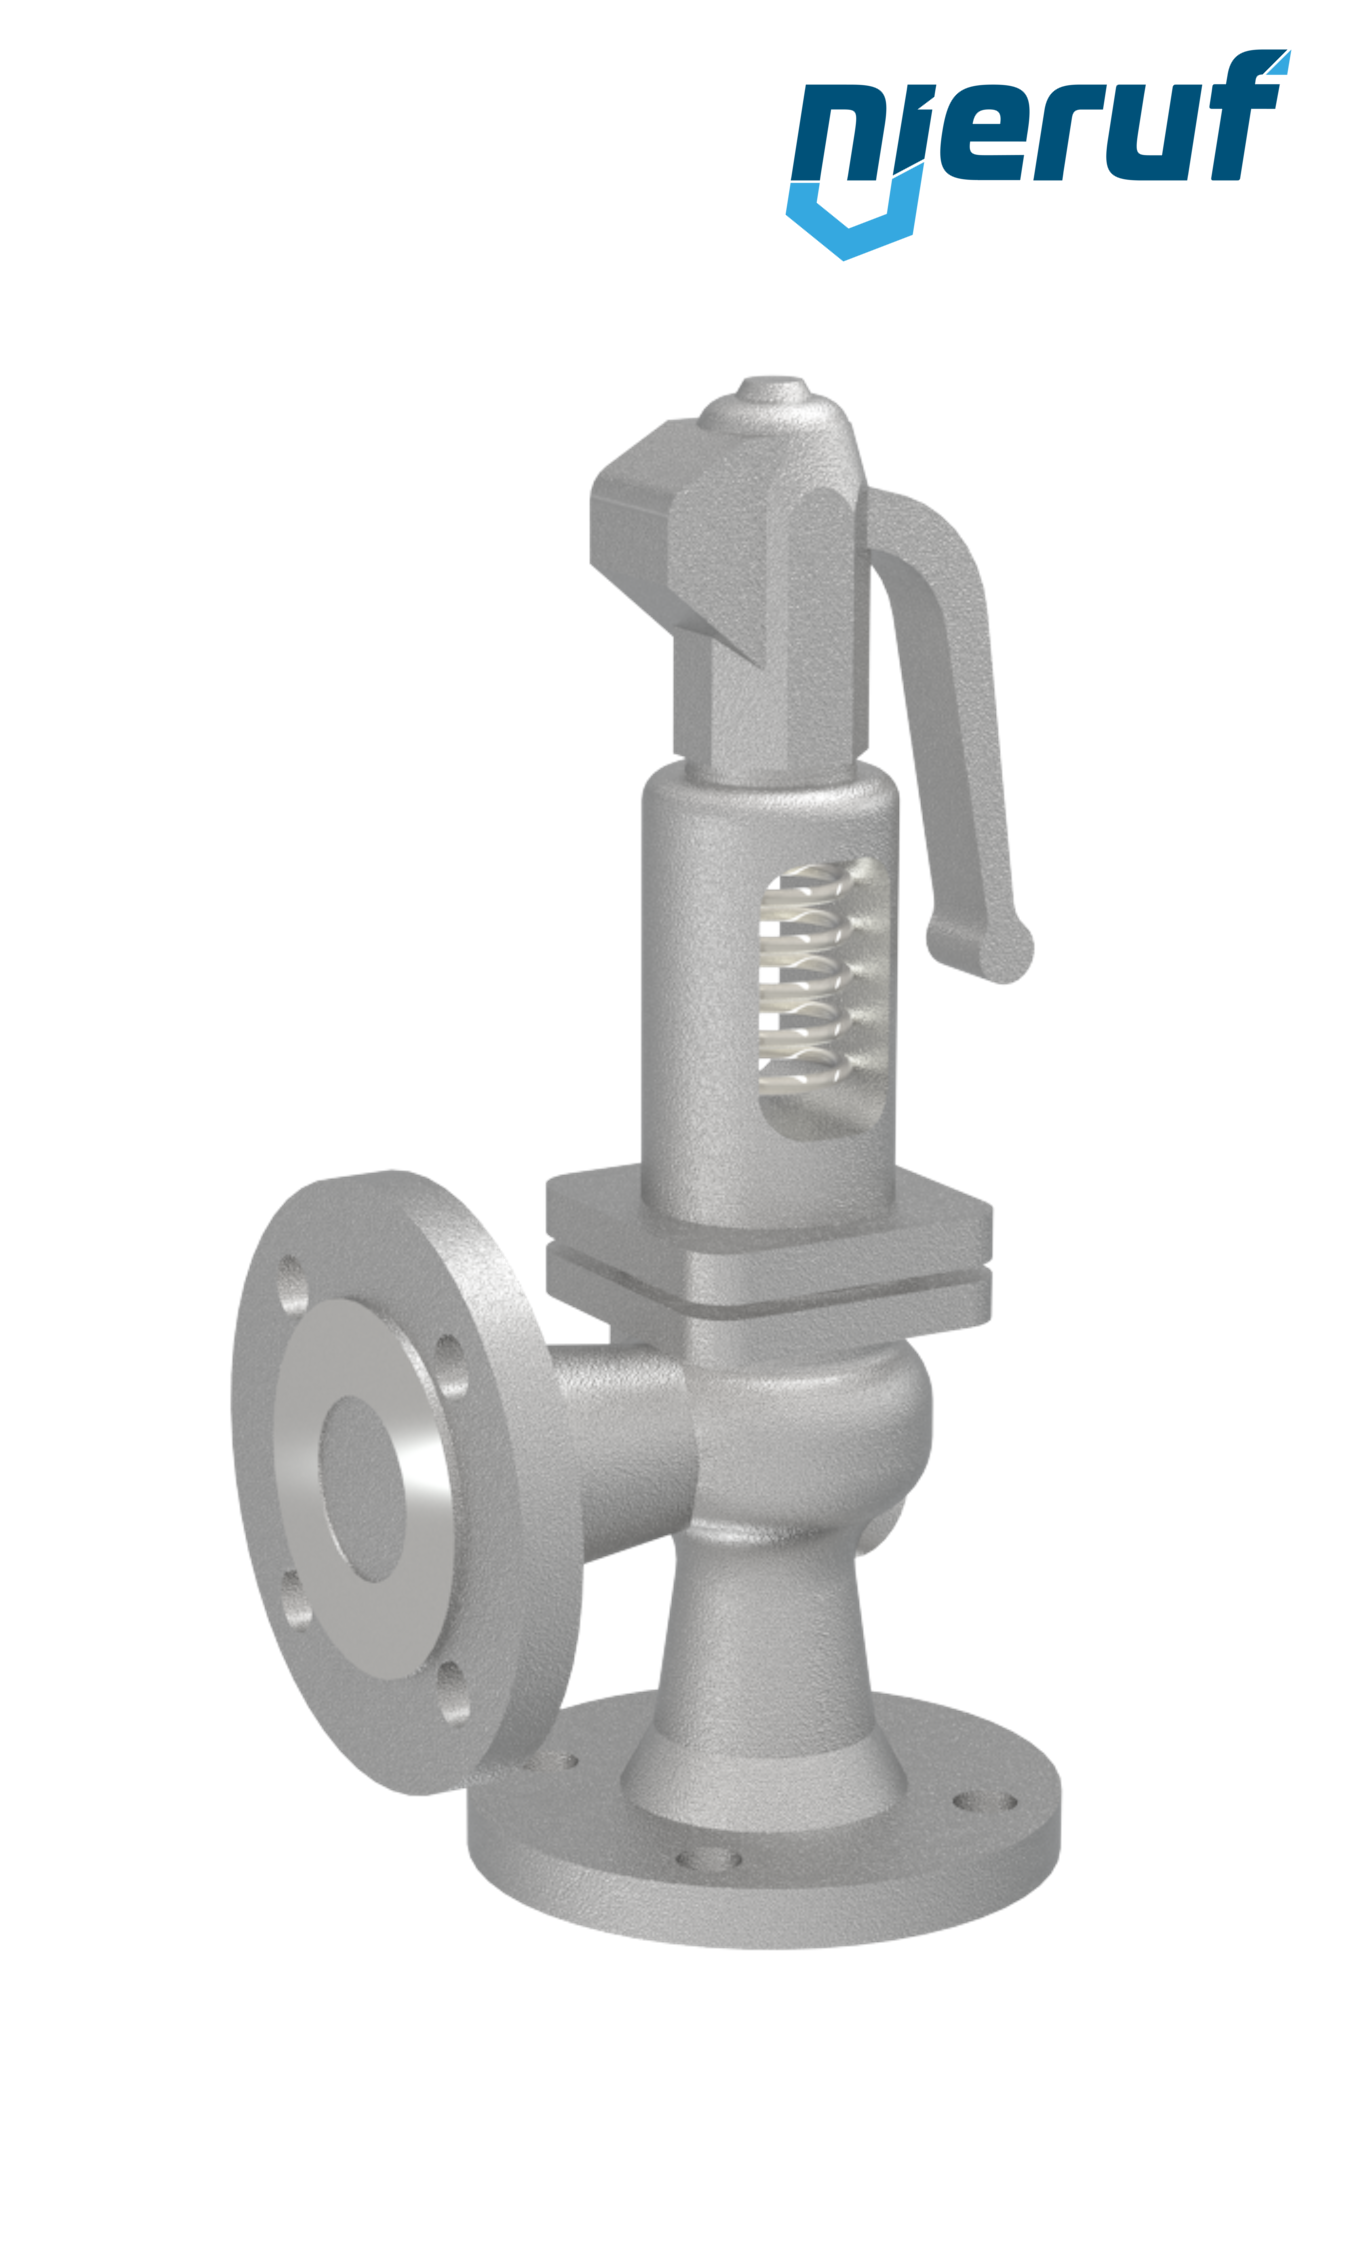 flange-safety valve DN100/DN100 SF0102, cast iron EN-JL1040 FPM, with lever